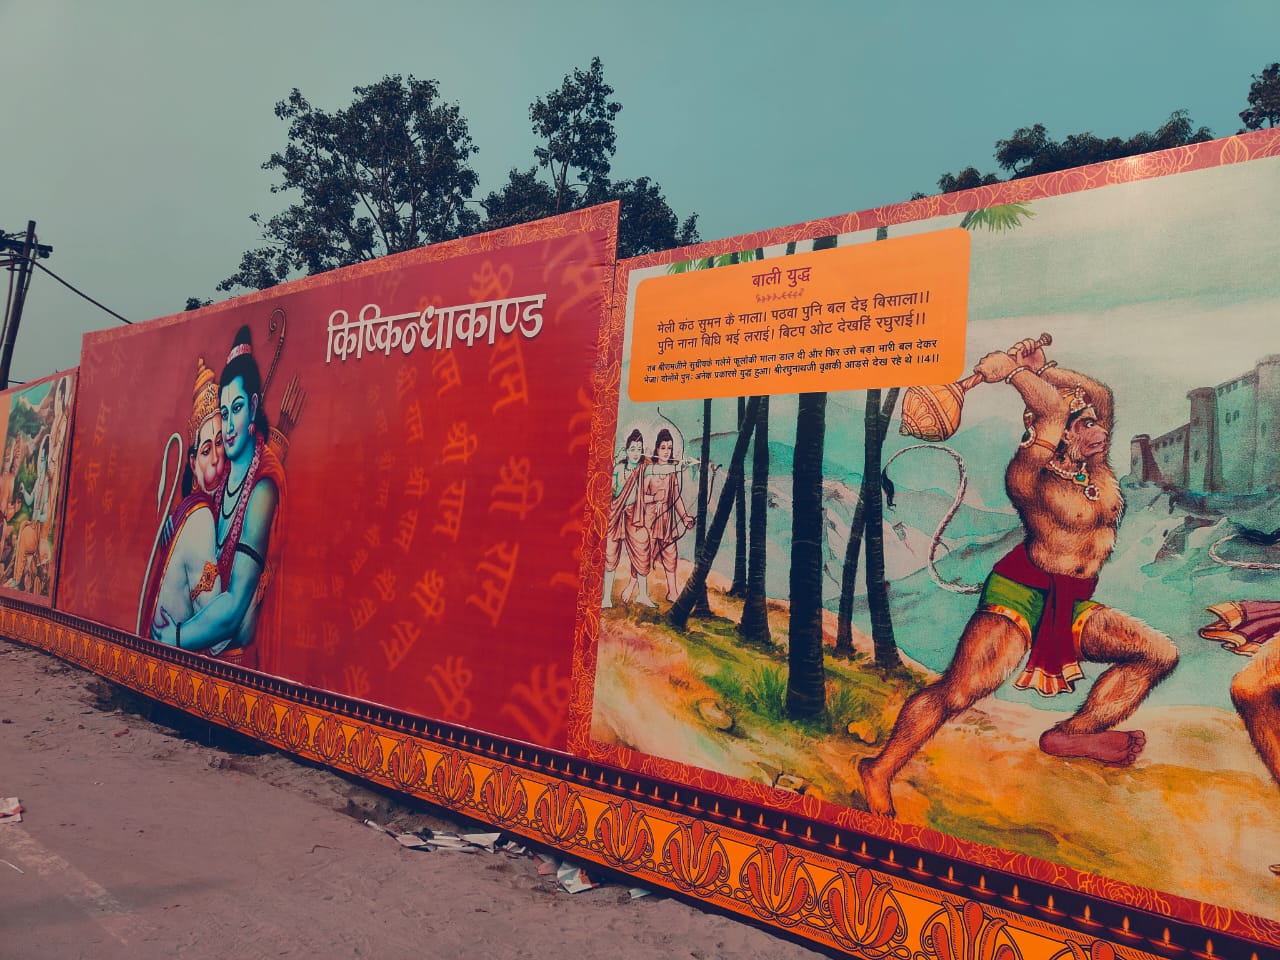 अयोध्या दीपोत्सव: अयोध्या में बिखरने लगी छटा, जगमग हुई अवधपुरी